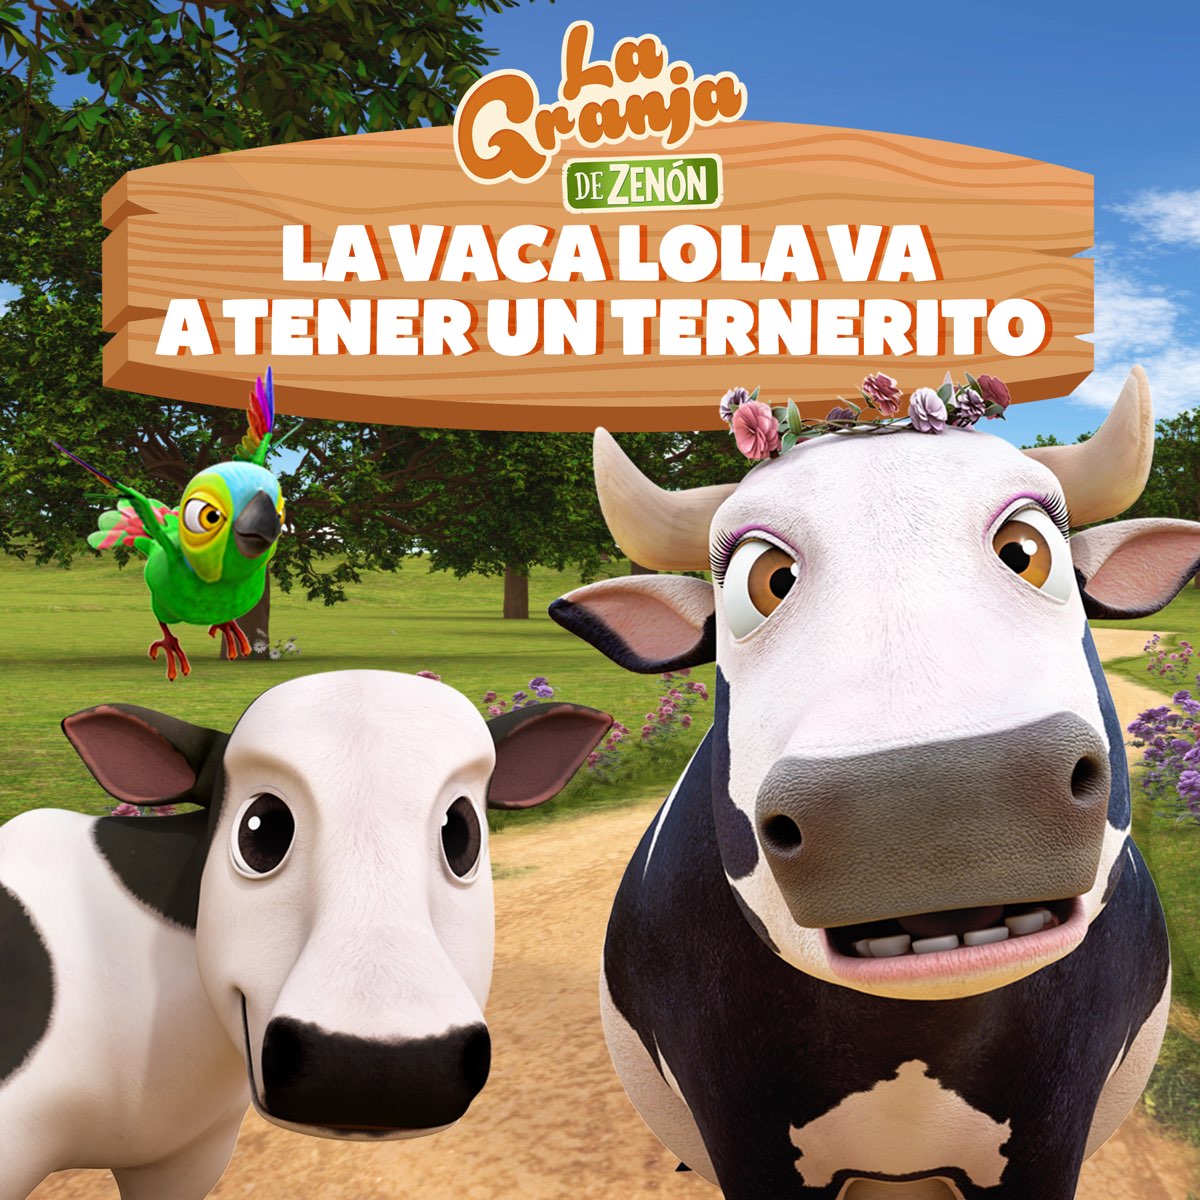 La Vaca Lola - Canciones de La Granja de Zenón 2 